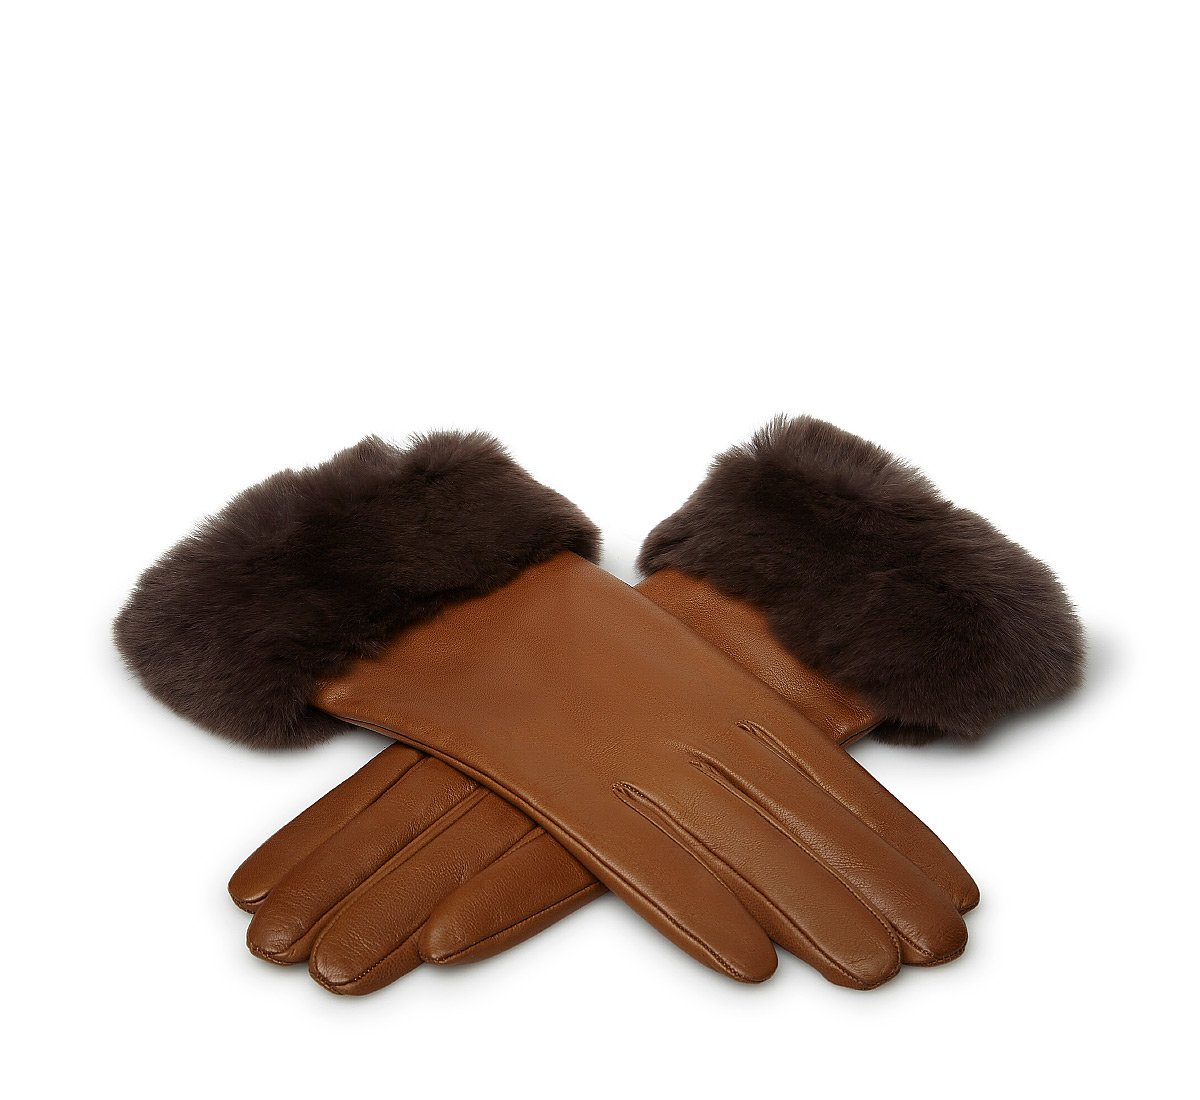 Brown gloves with fur trim